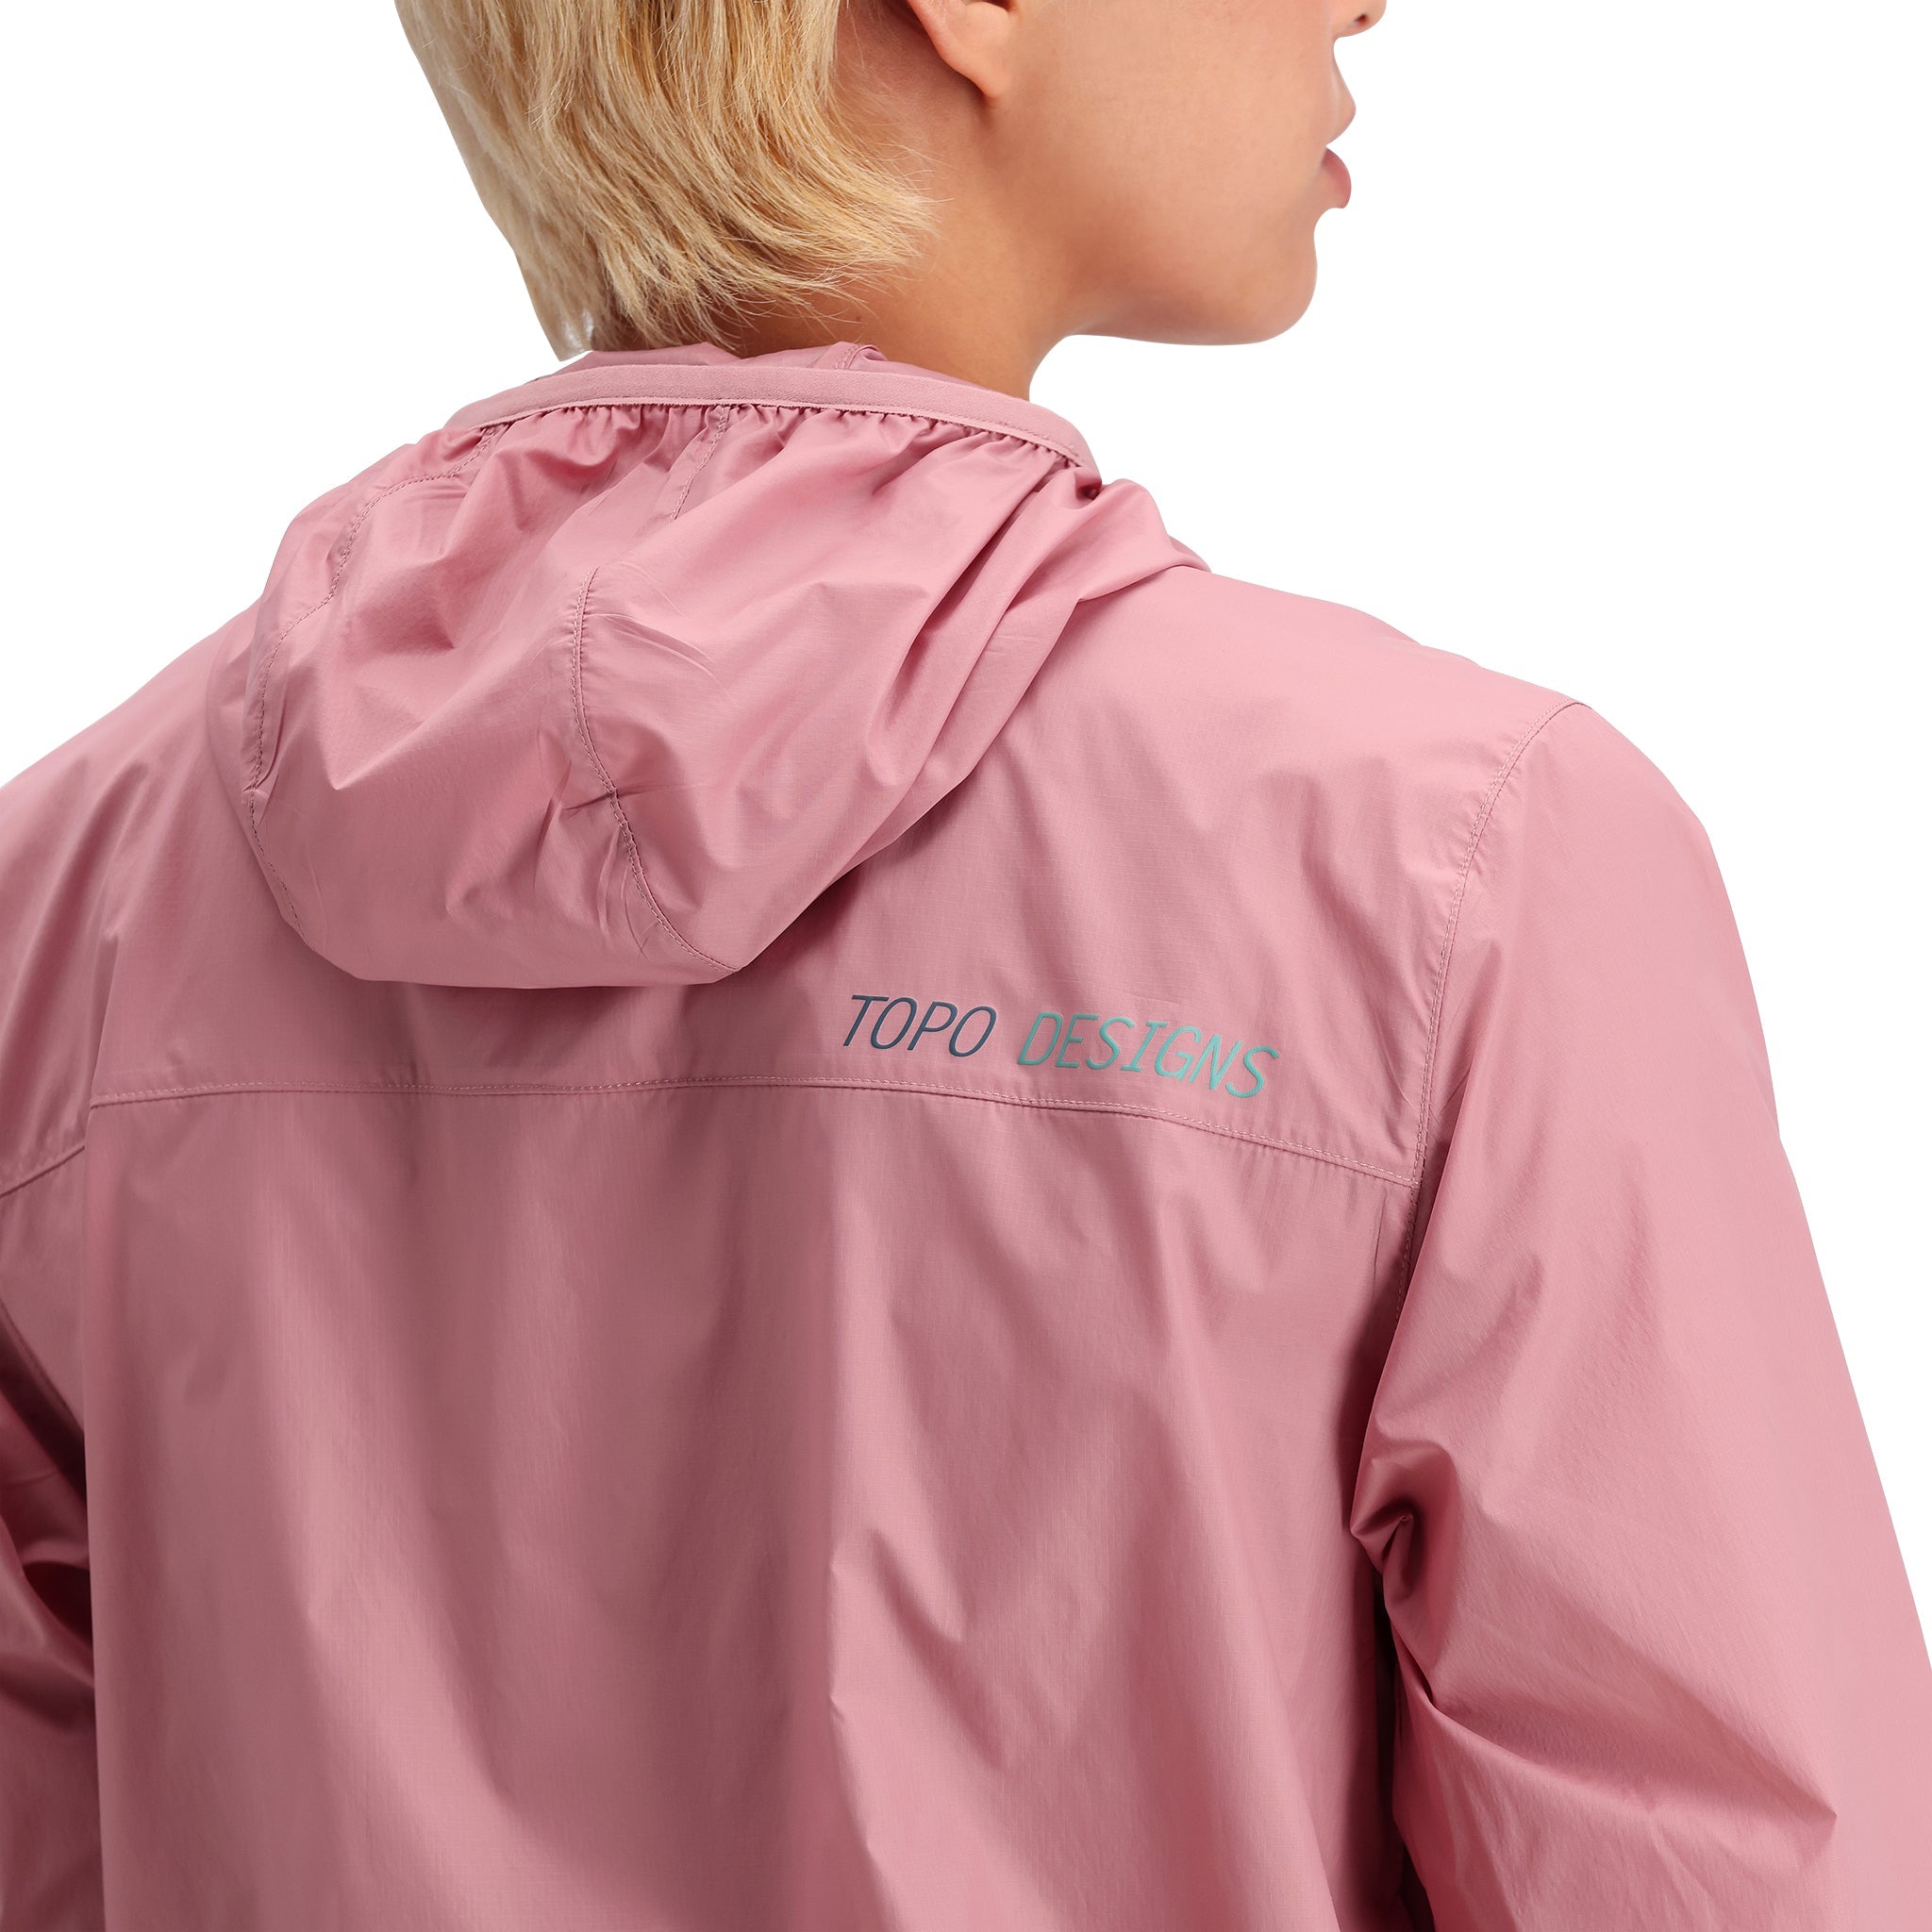 Detail shot of Topo Designs Global Ultralight Packable Jacket - Women's in "Rose"